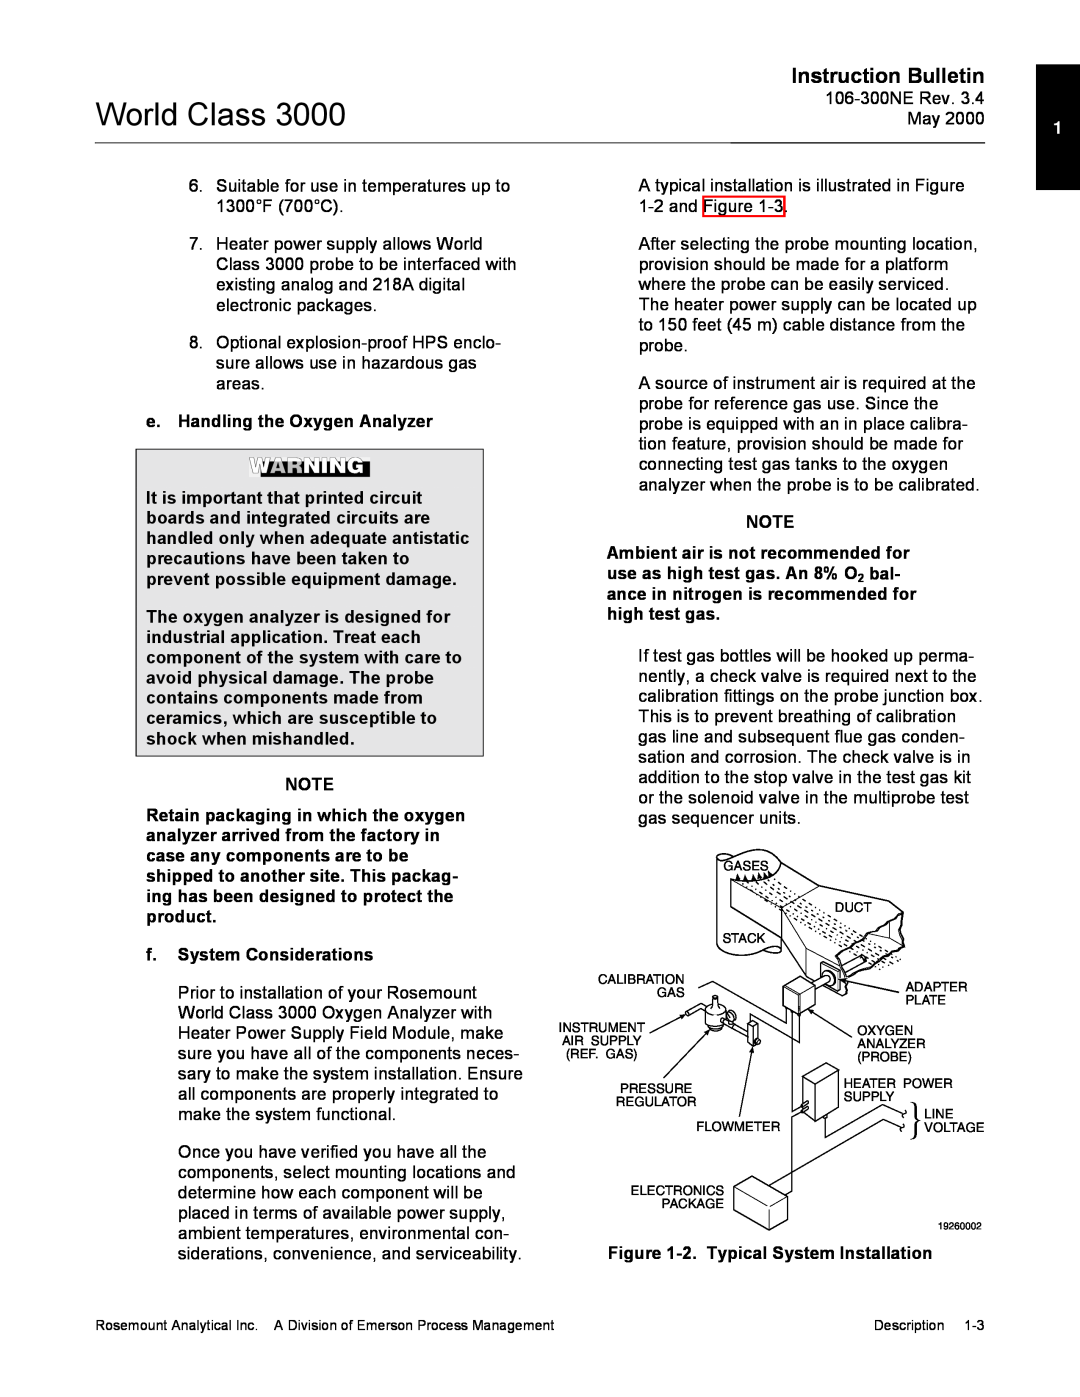 Emerson 3000 manual Instruction Bulletin, e.Handling the Oxygen Analyzer 